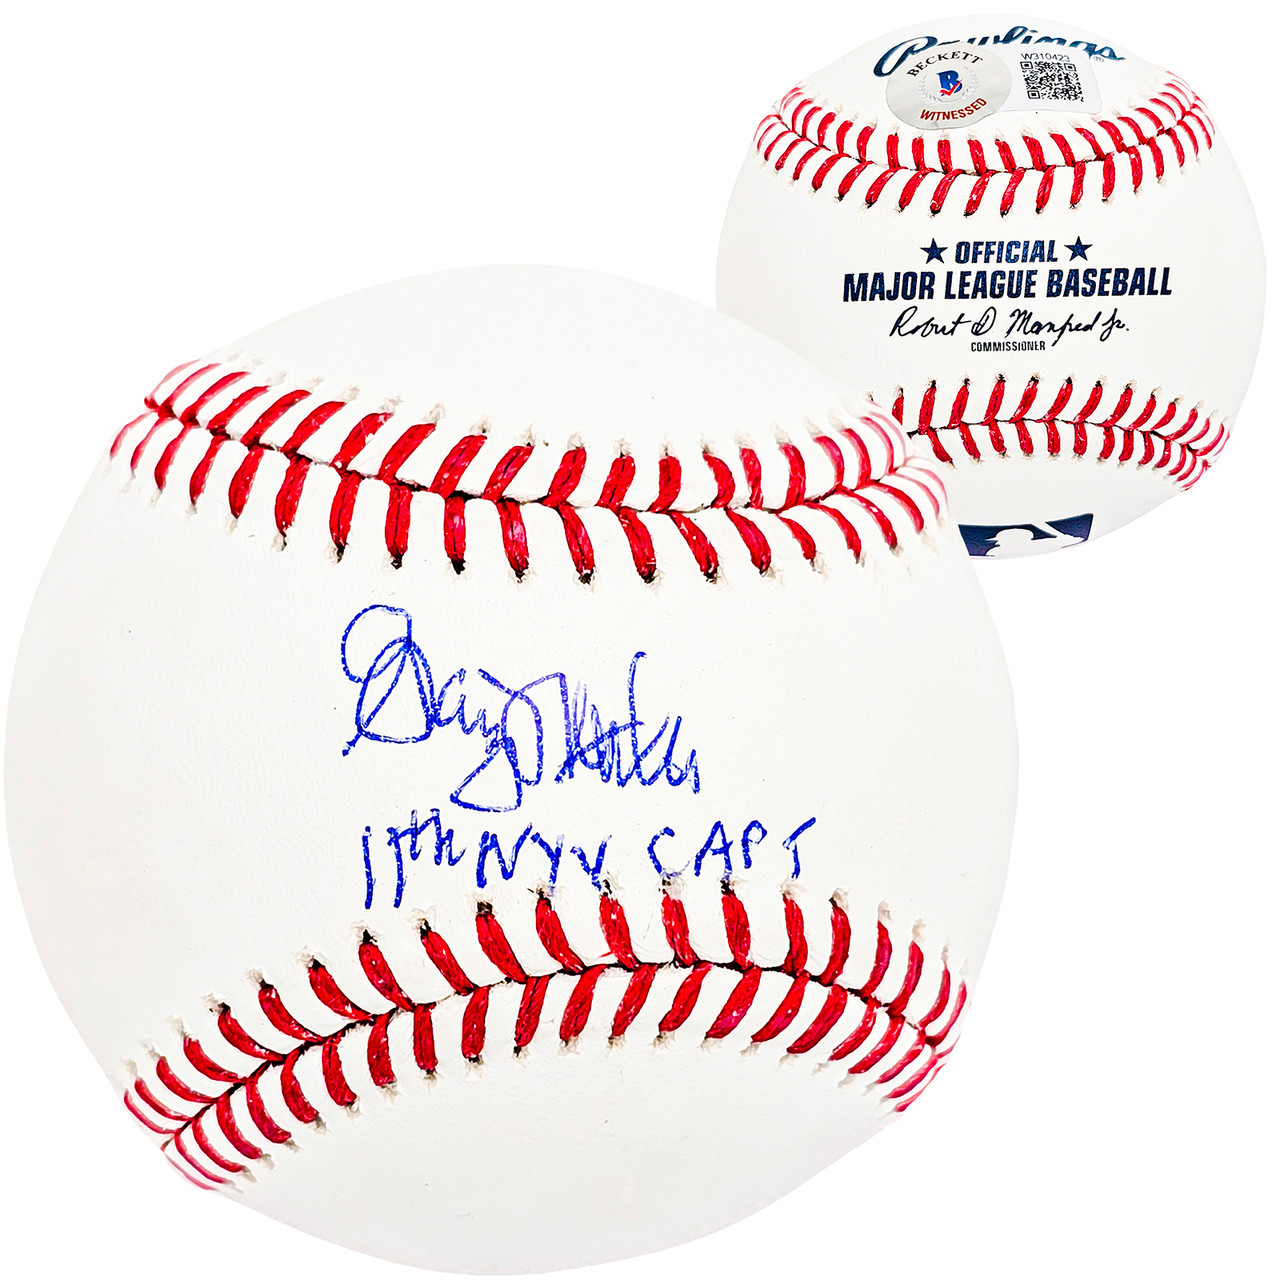 Graig Nettles Autographed Official MLB Baseball New York Yankees 11th NYY  Capt Beckett BAS Witness Stock #212200 - Mill Creek Sports